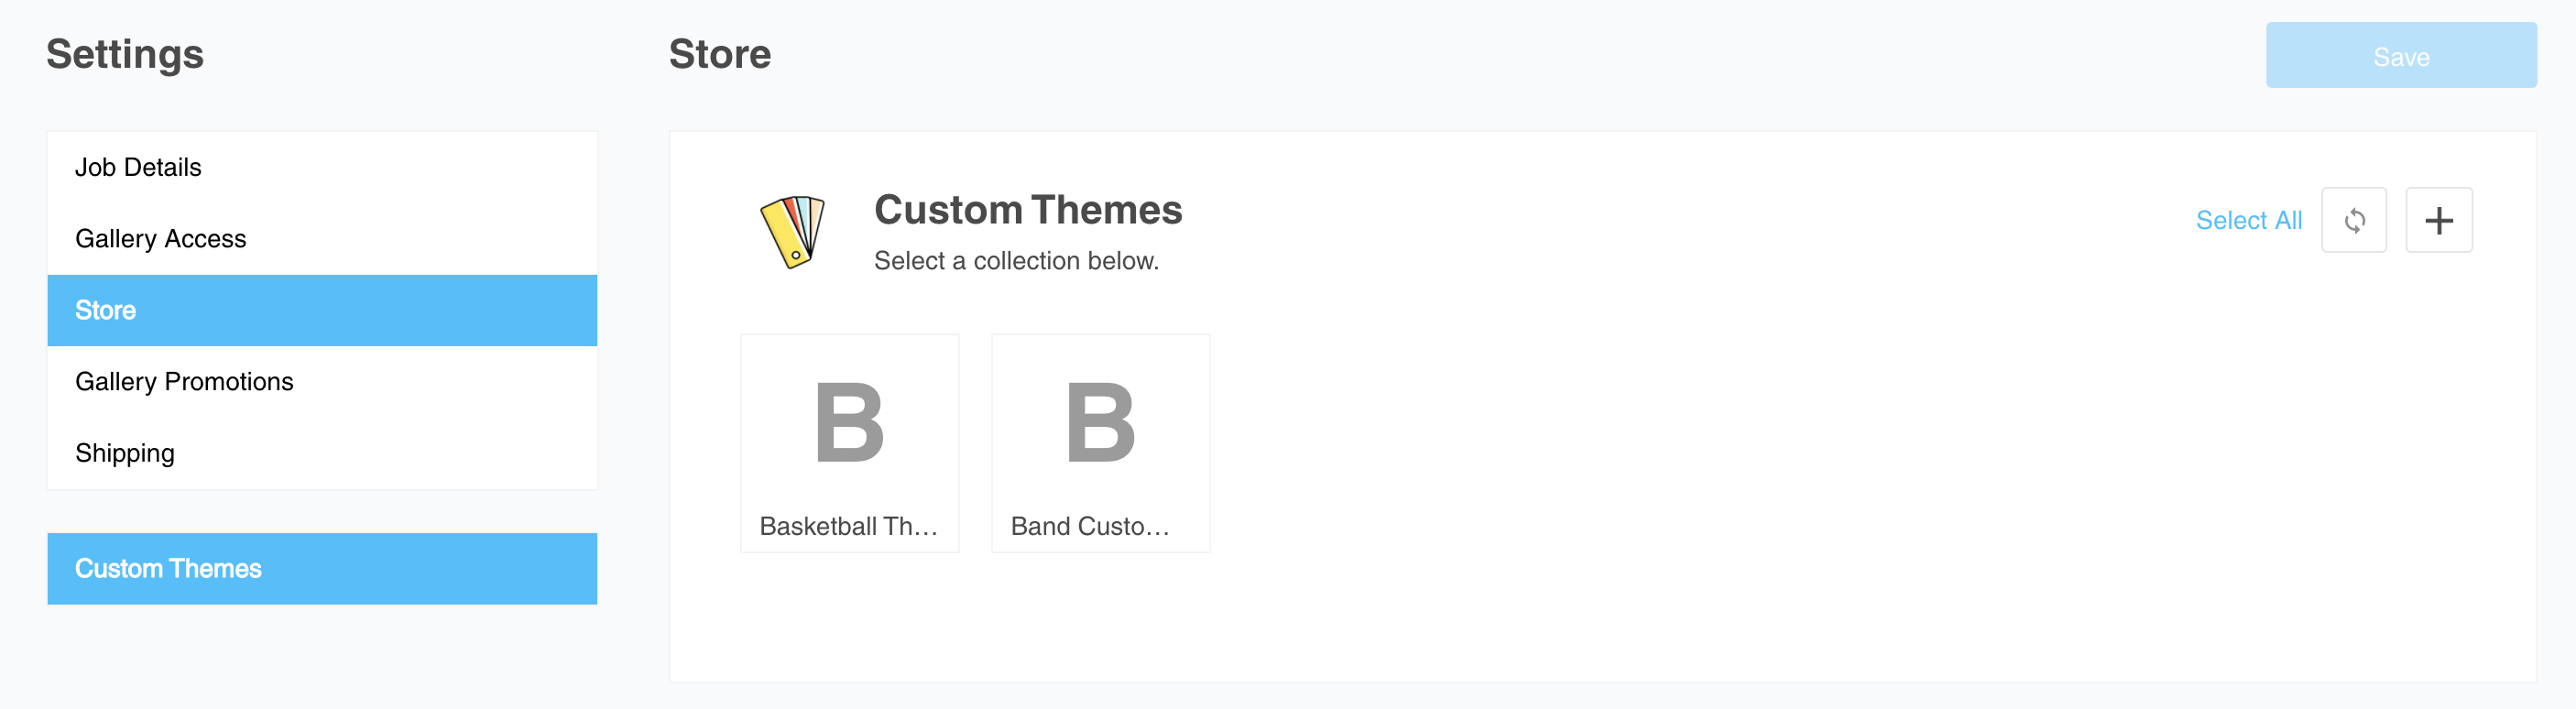 custom themes list